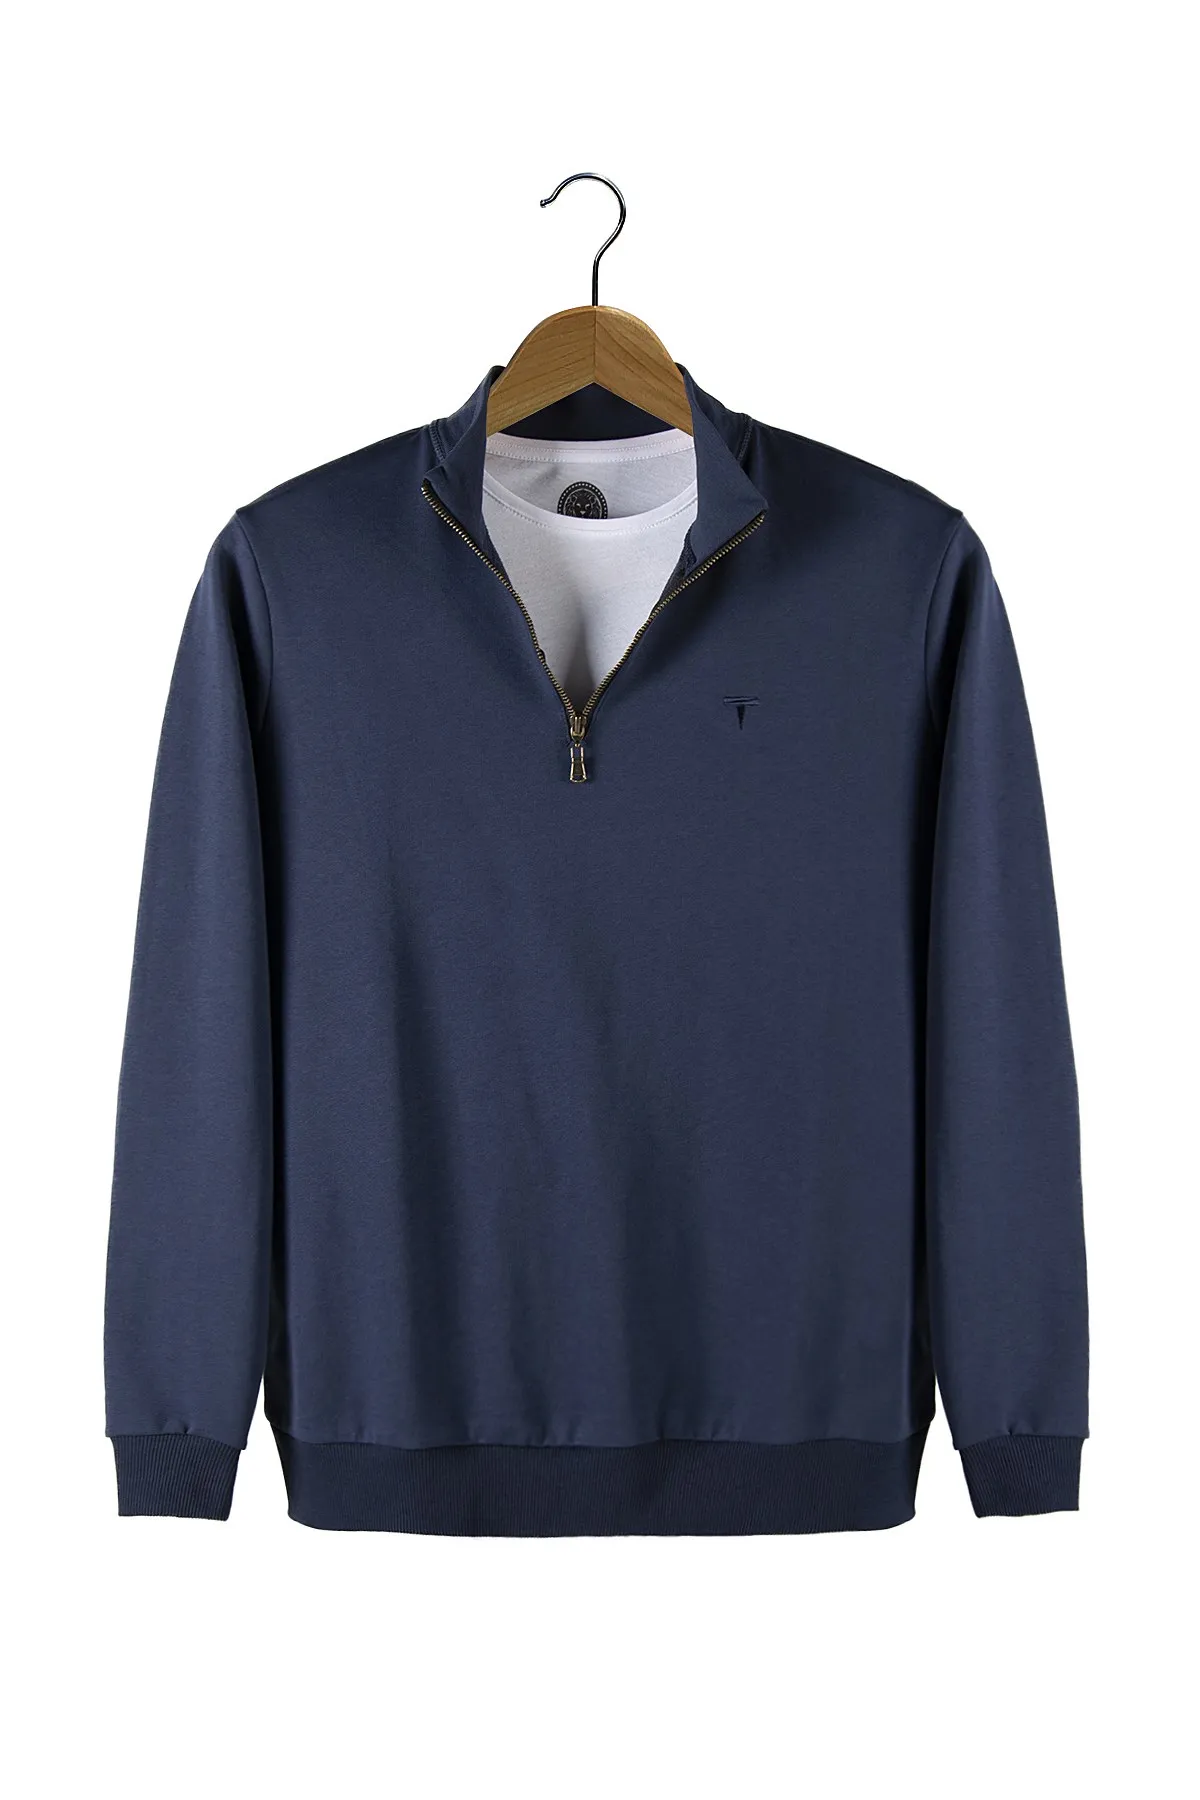 Therapy Men Male Half Zipper Basic Solid Color Trend Sweatshirt 21K-5200179 Indigo